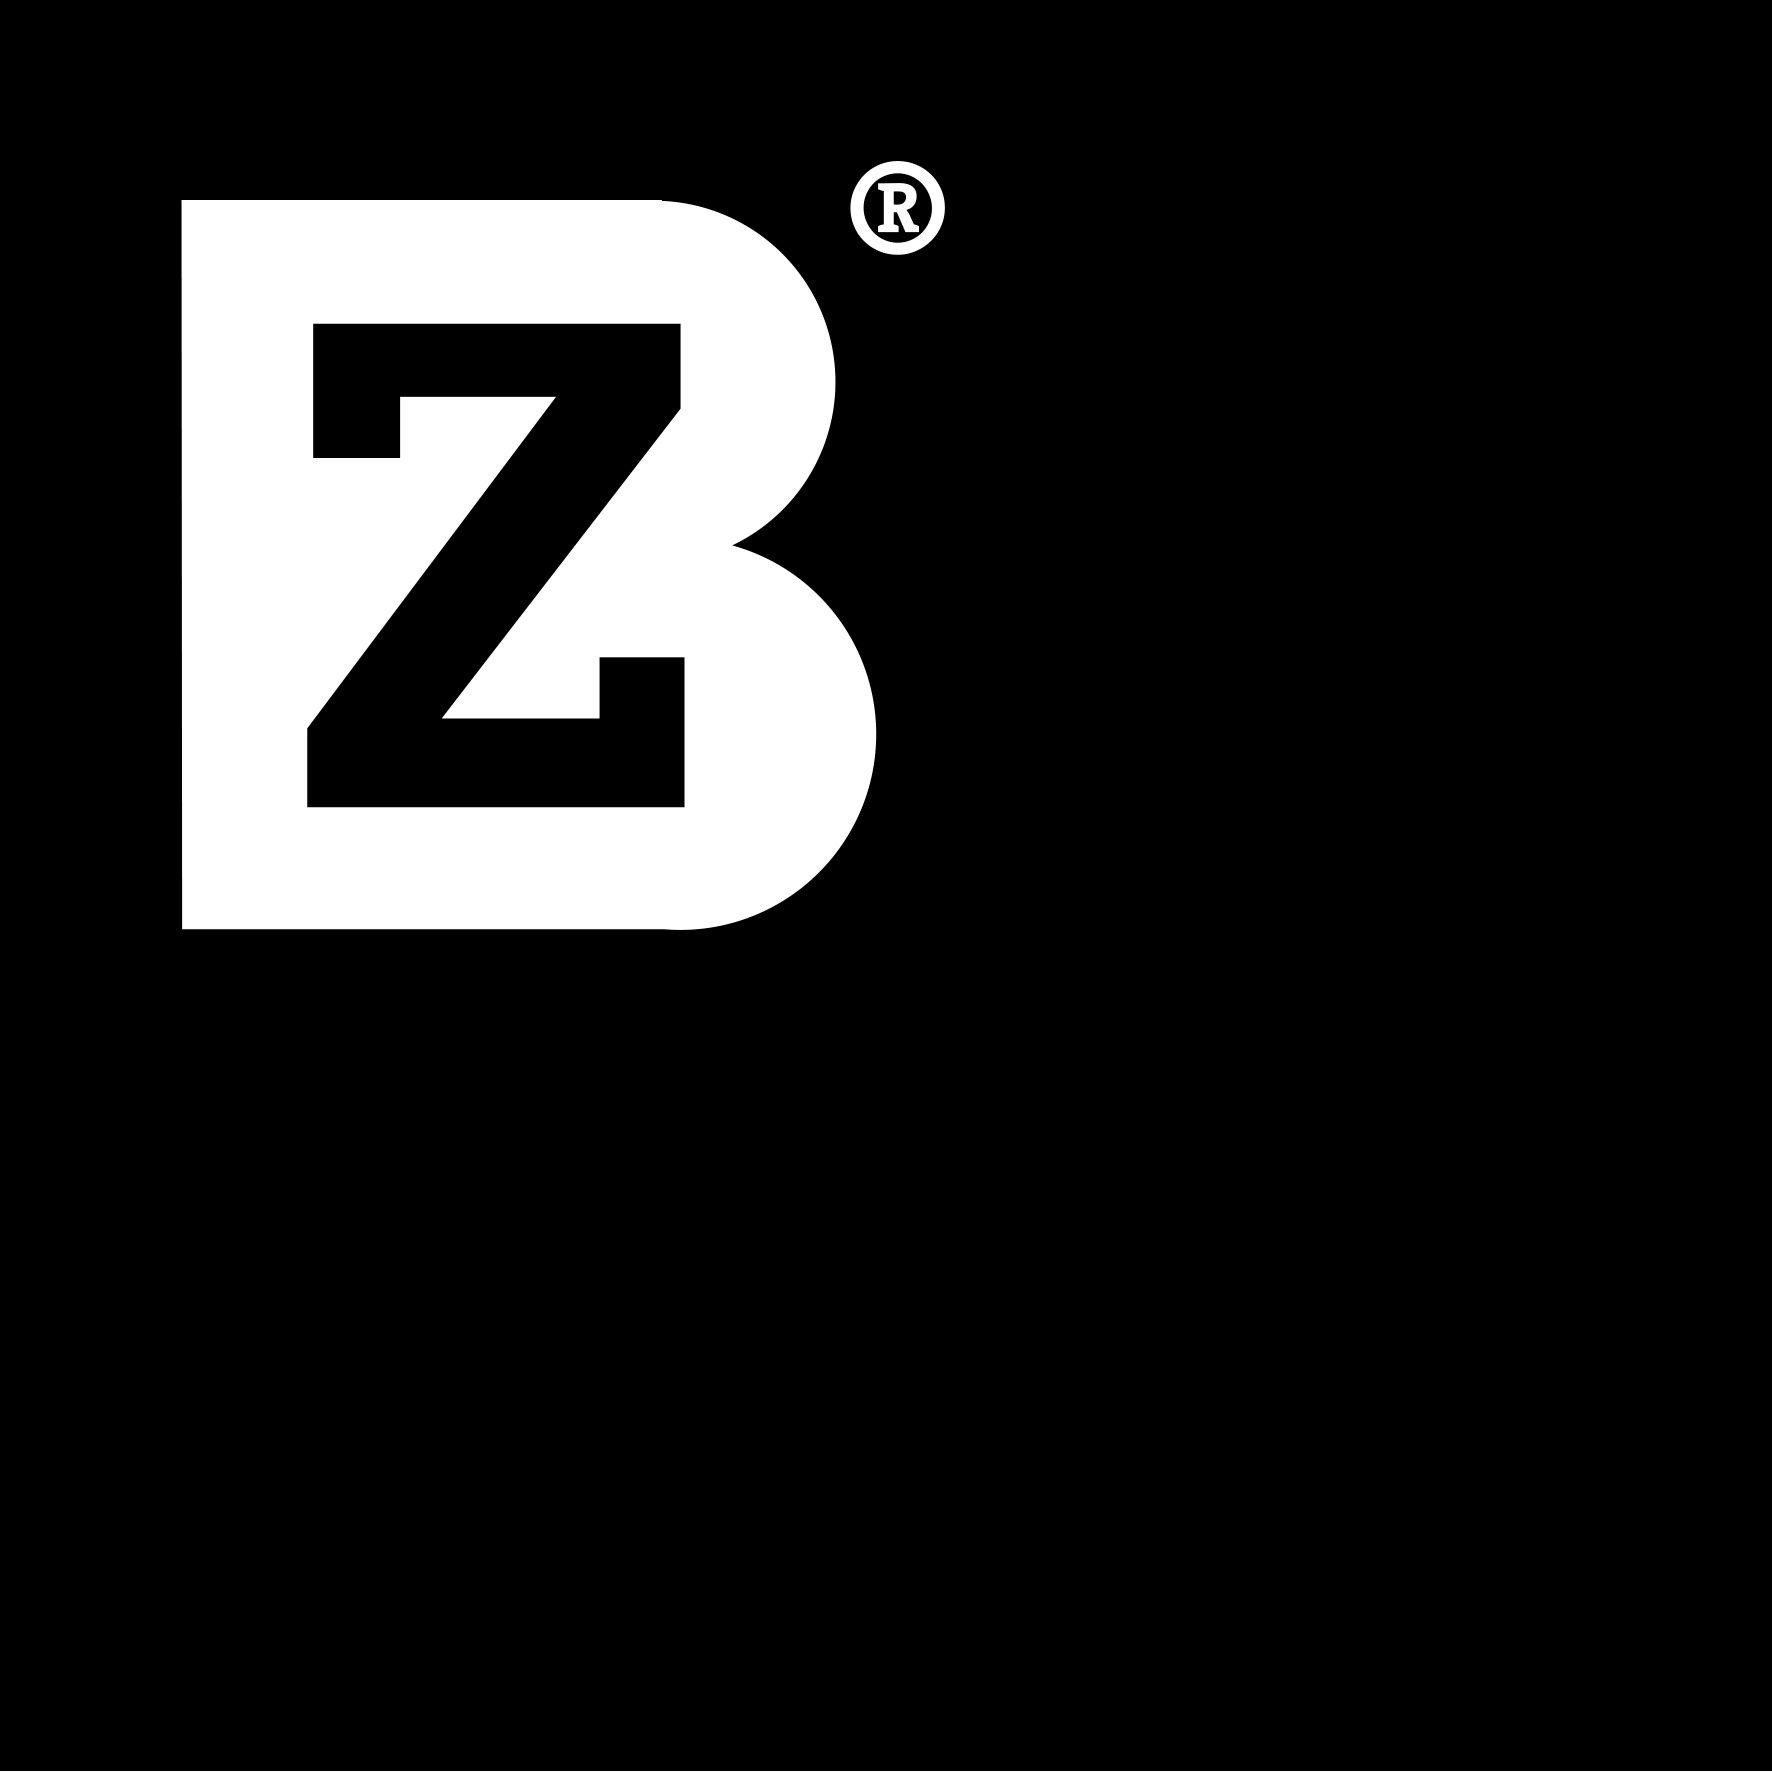 Bz logo Free Stock Vectors